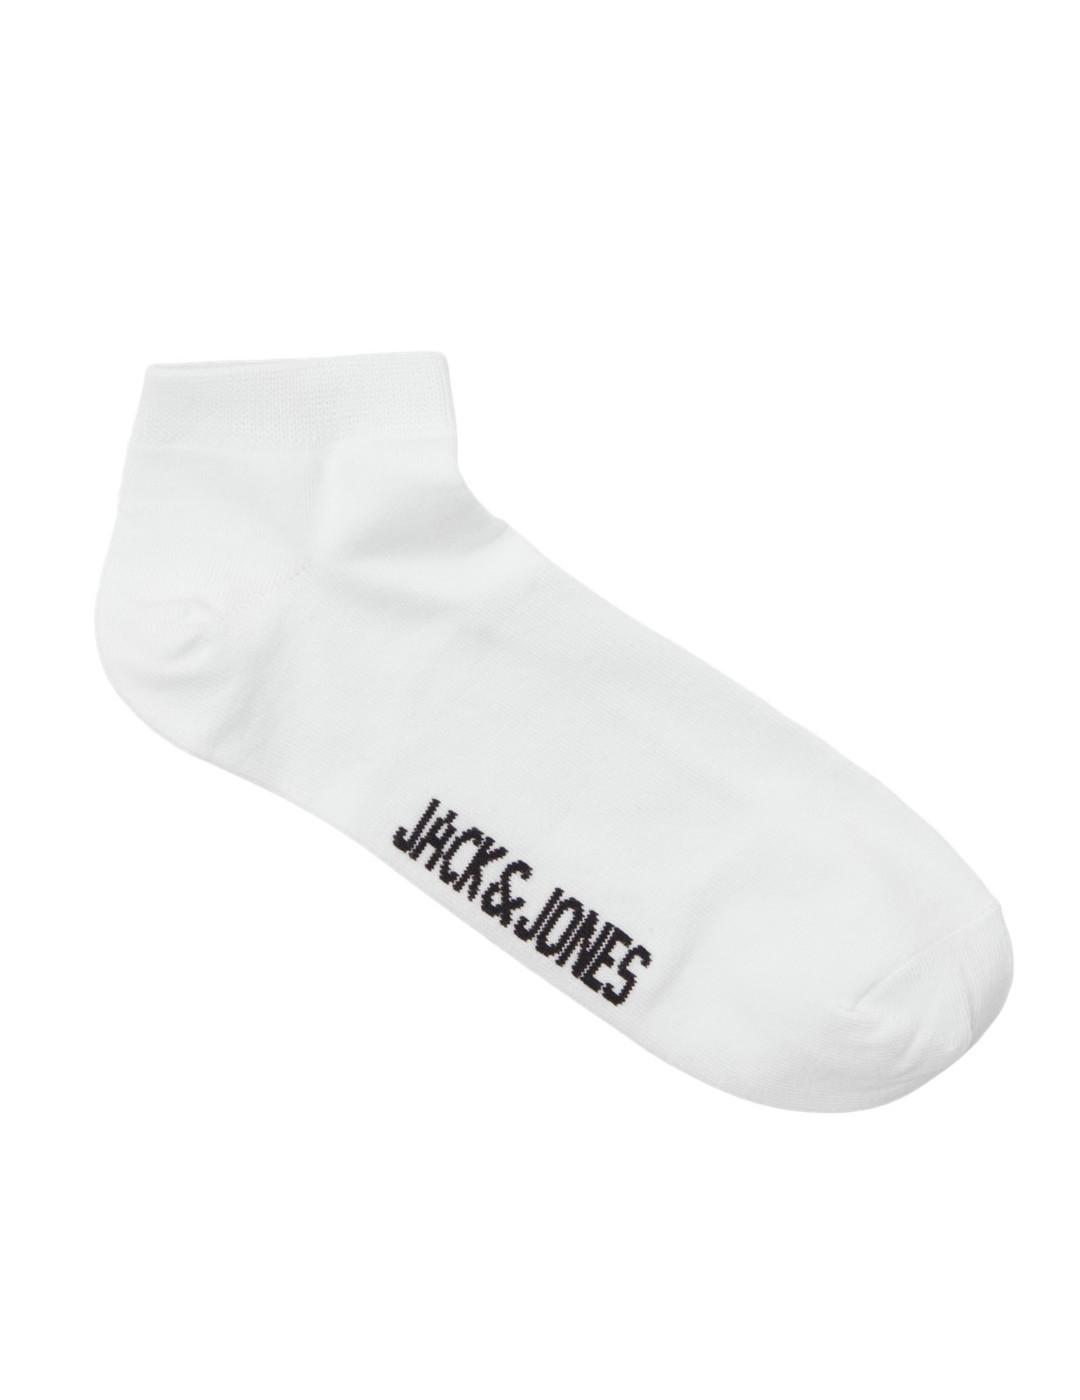 Calcetines tobilleros Jack&Jones pack 7 pares azules  hombre